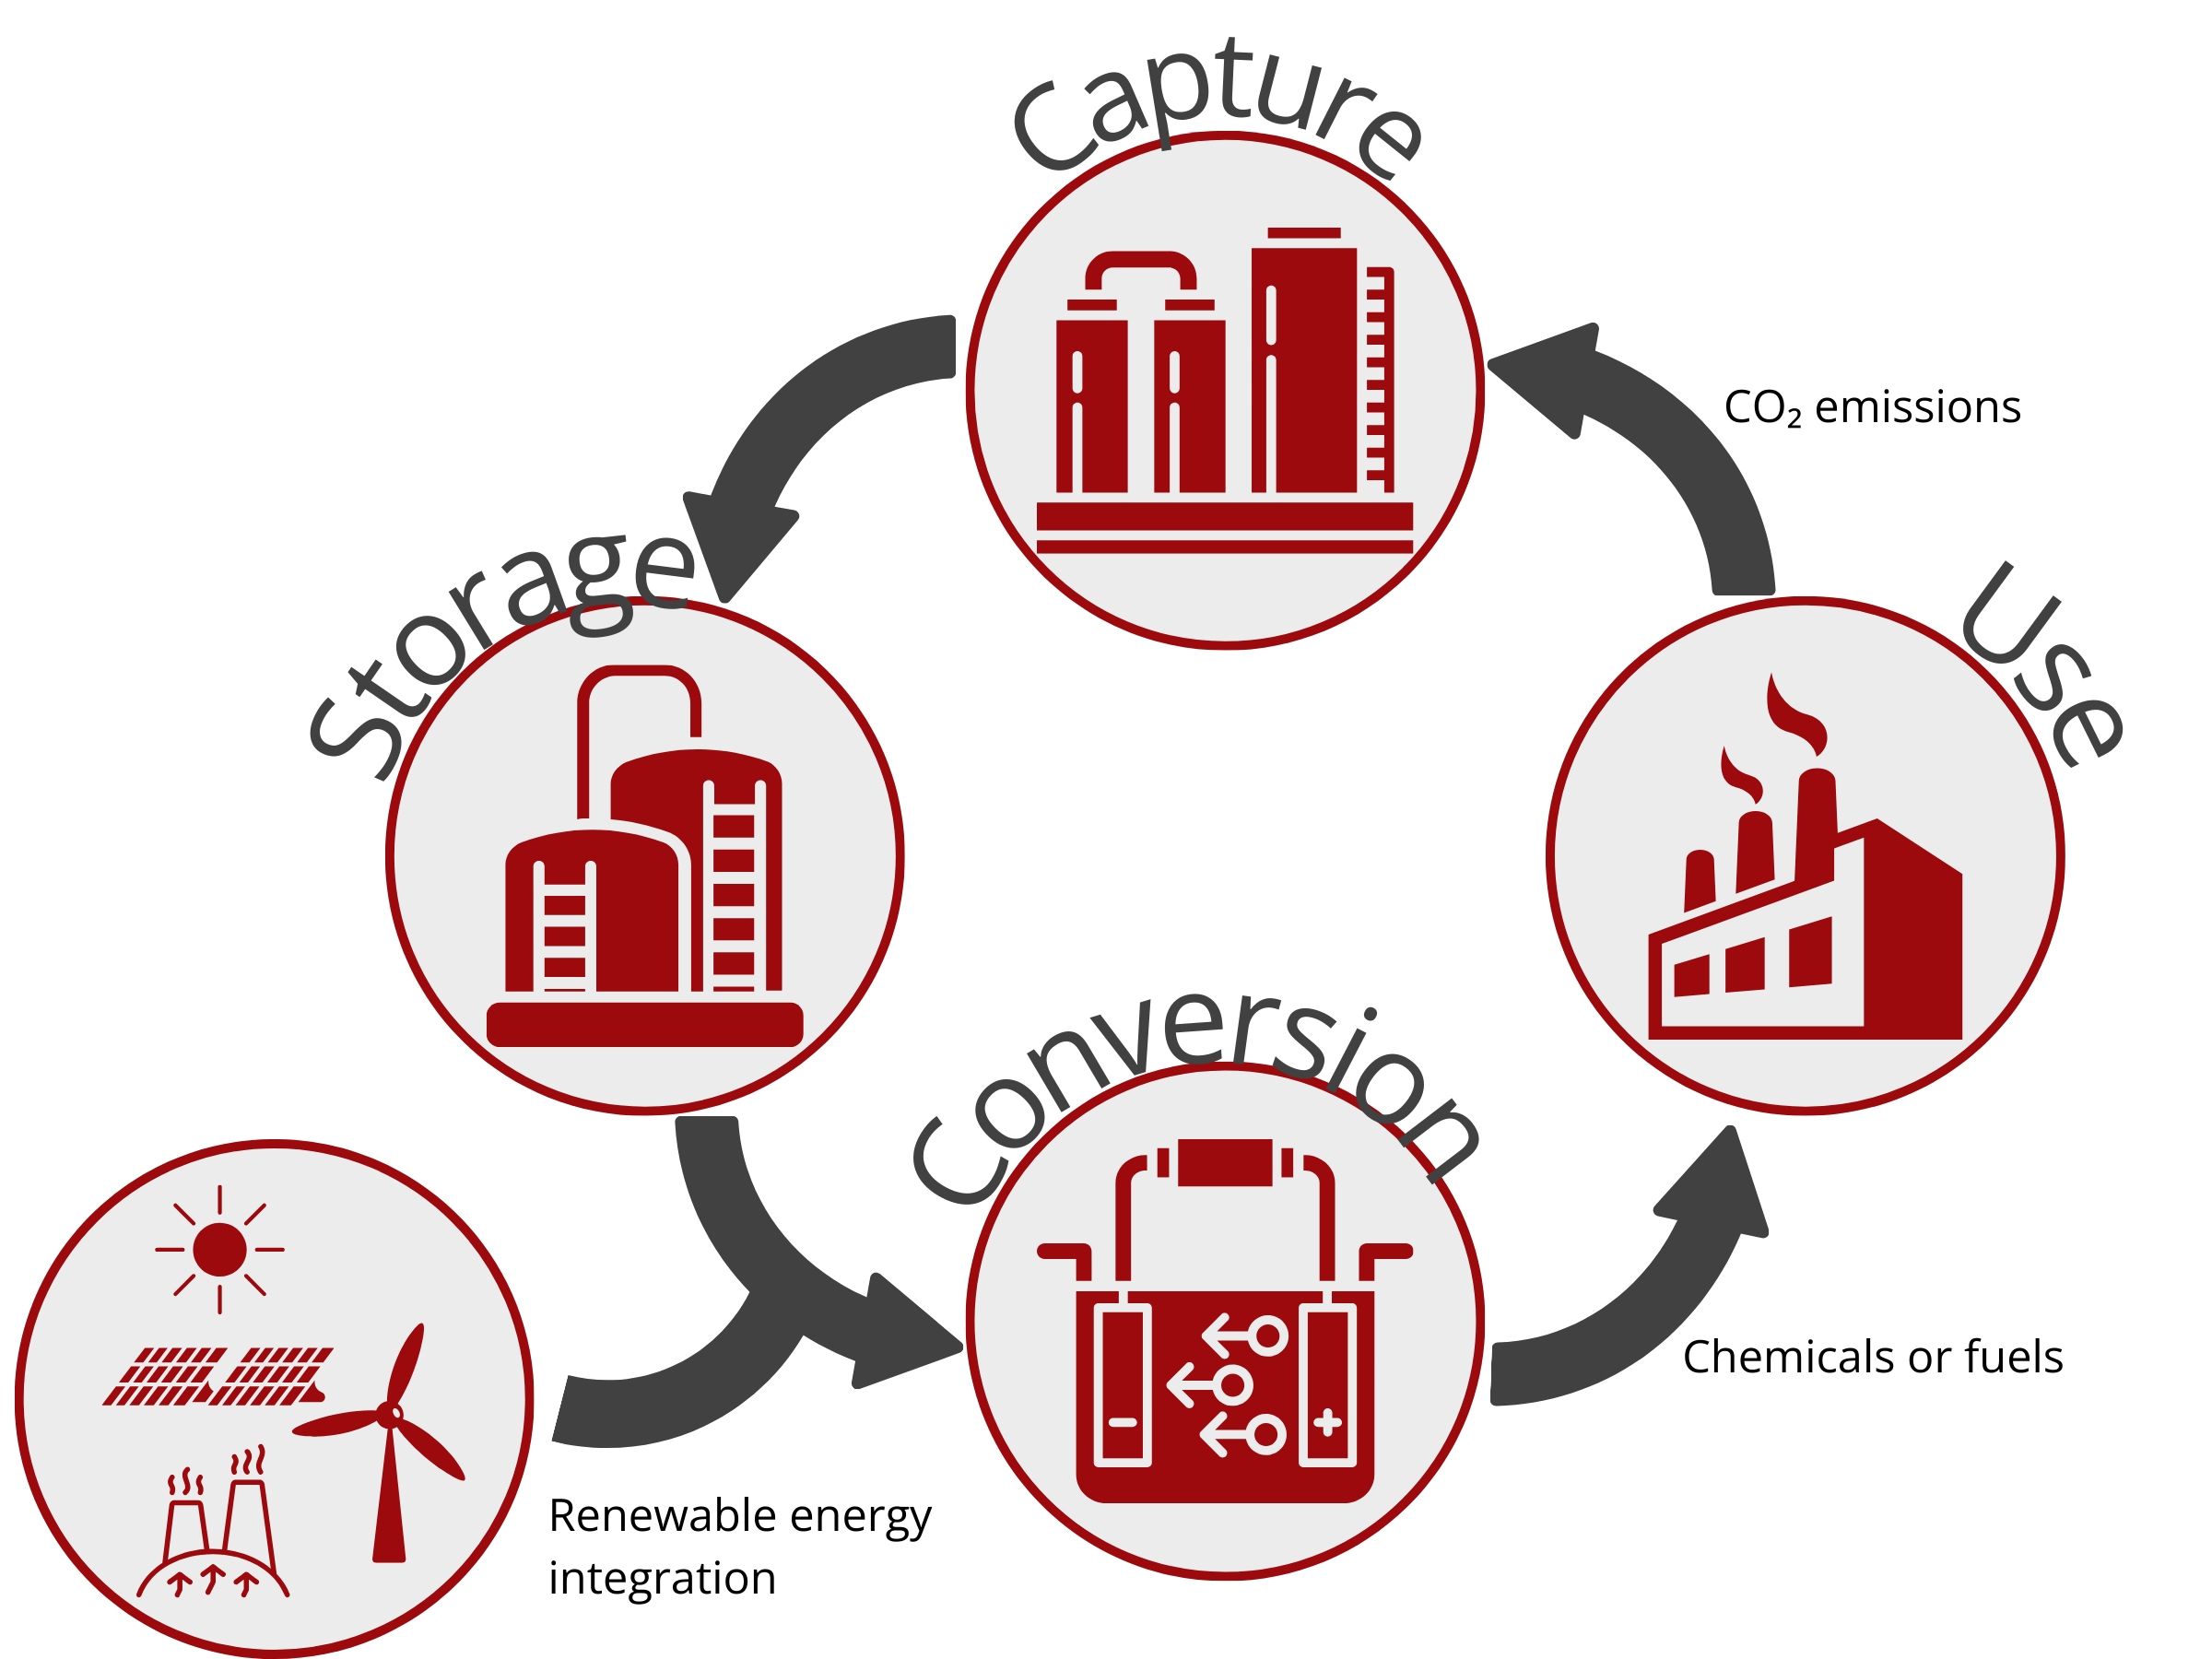 Carbon capture, storage, and utilization